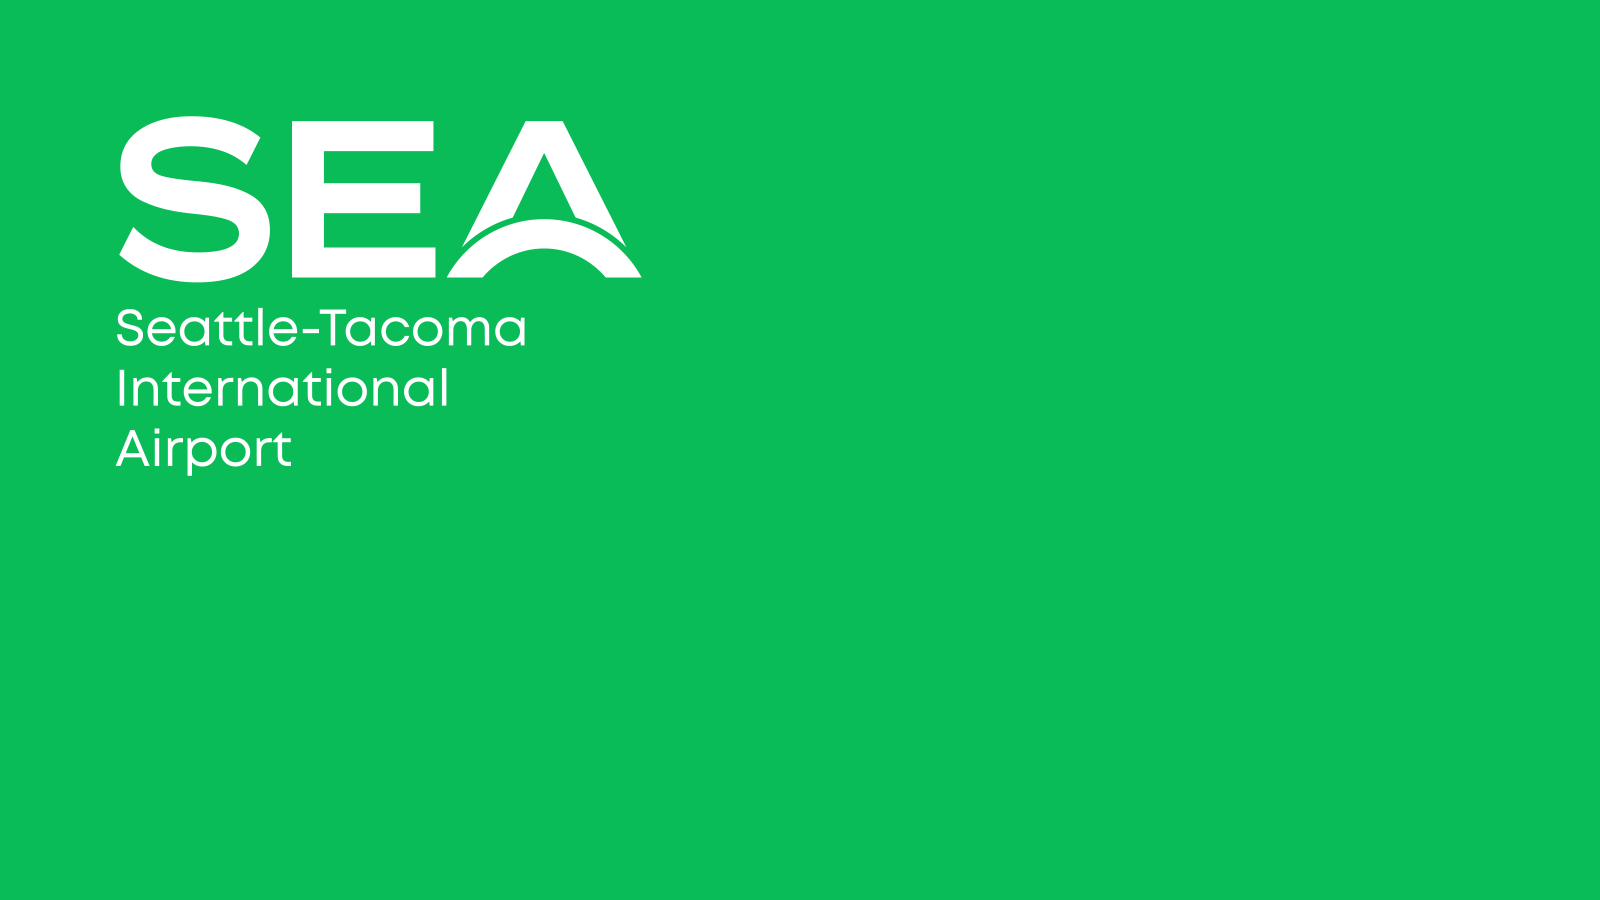 SEA西雅图塔科马国际机场新logo